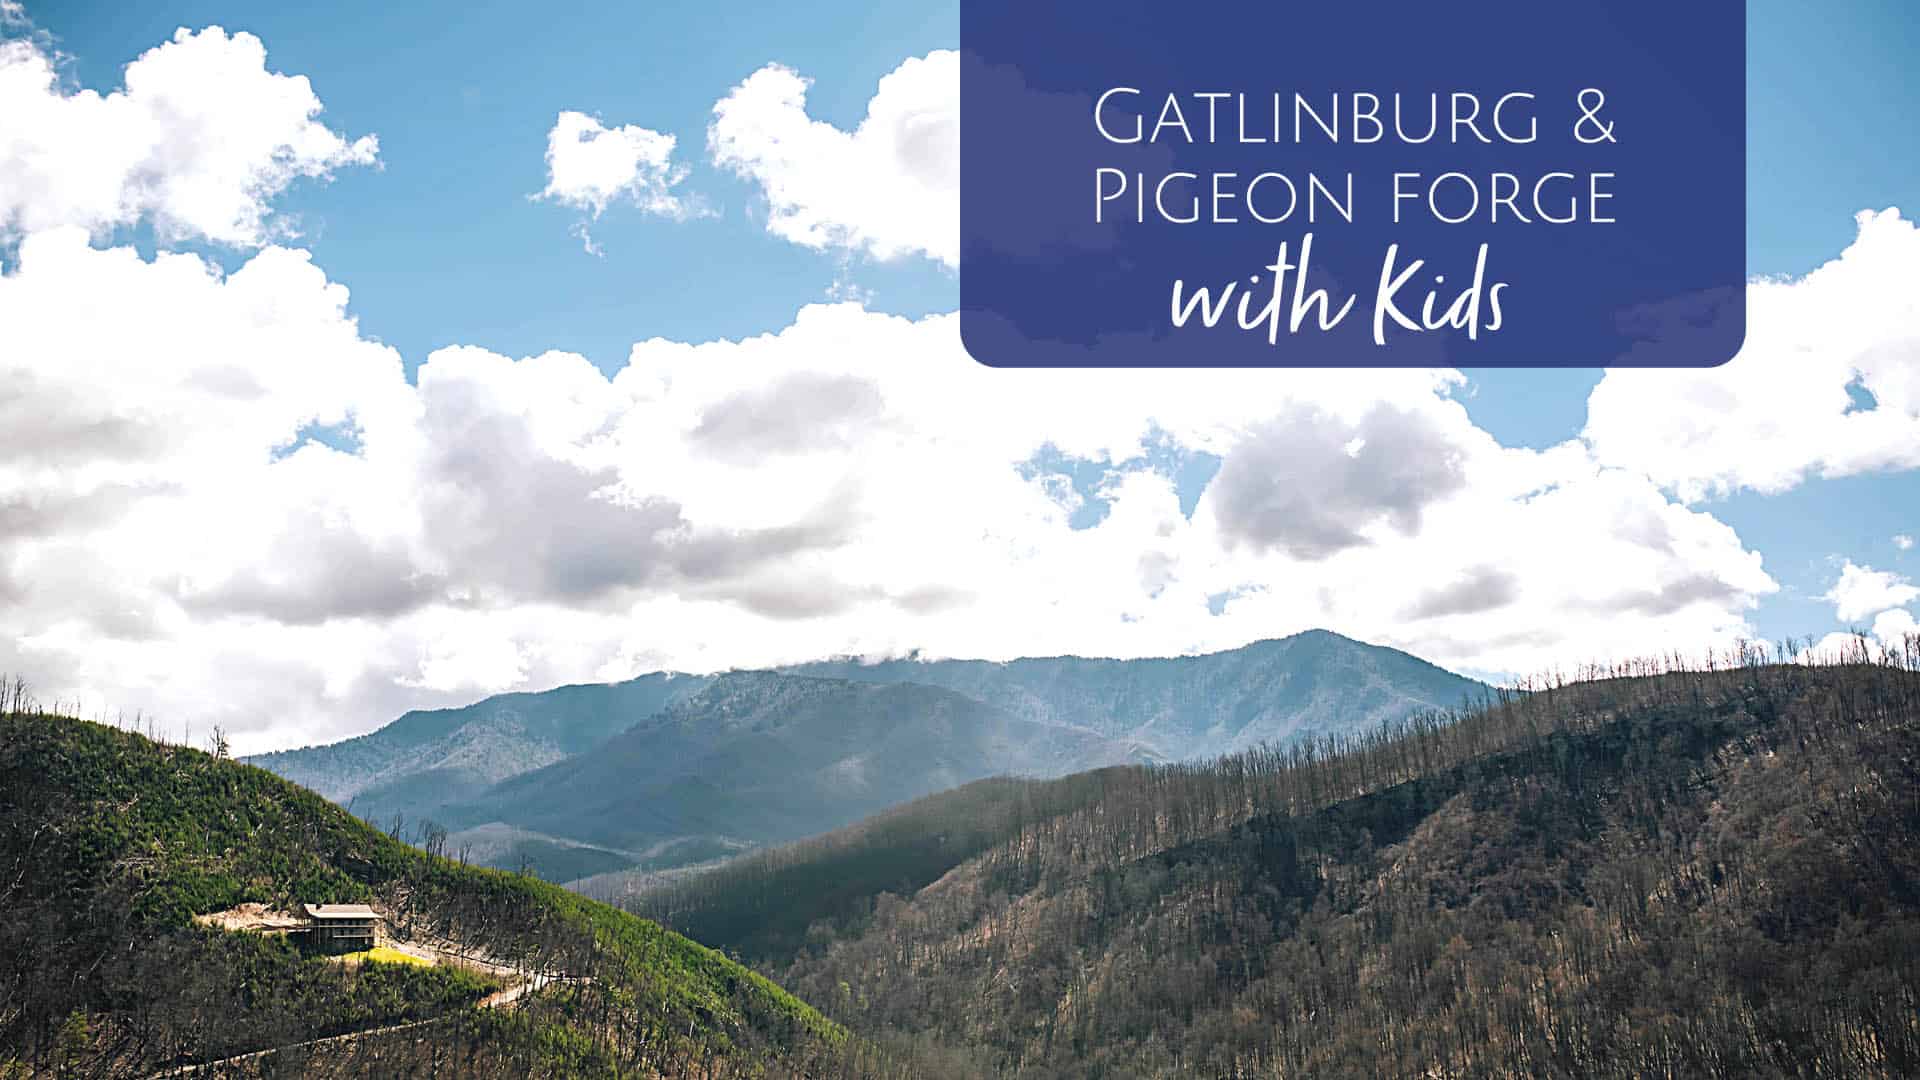 Gatlinburg & Pigeon Forge with Kids